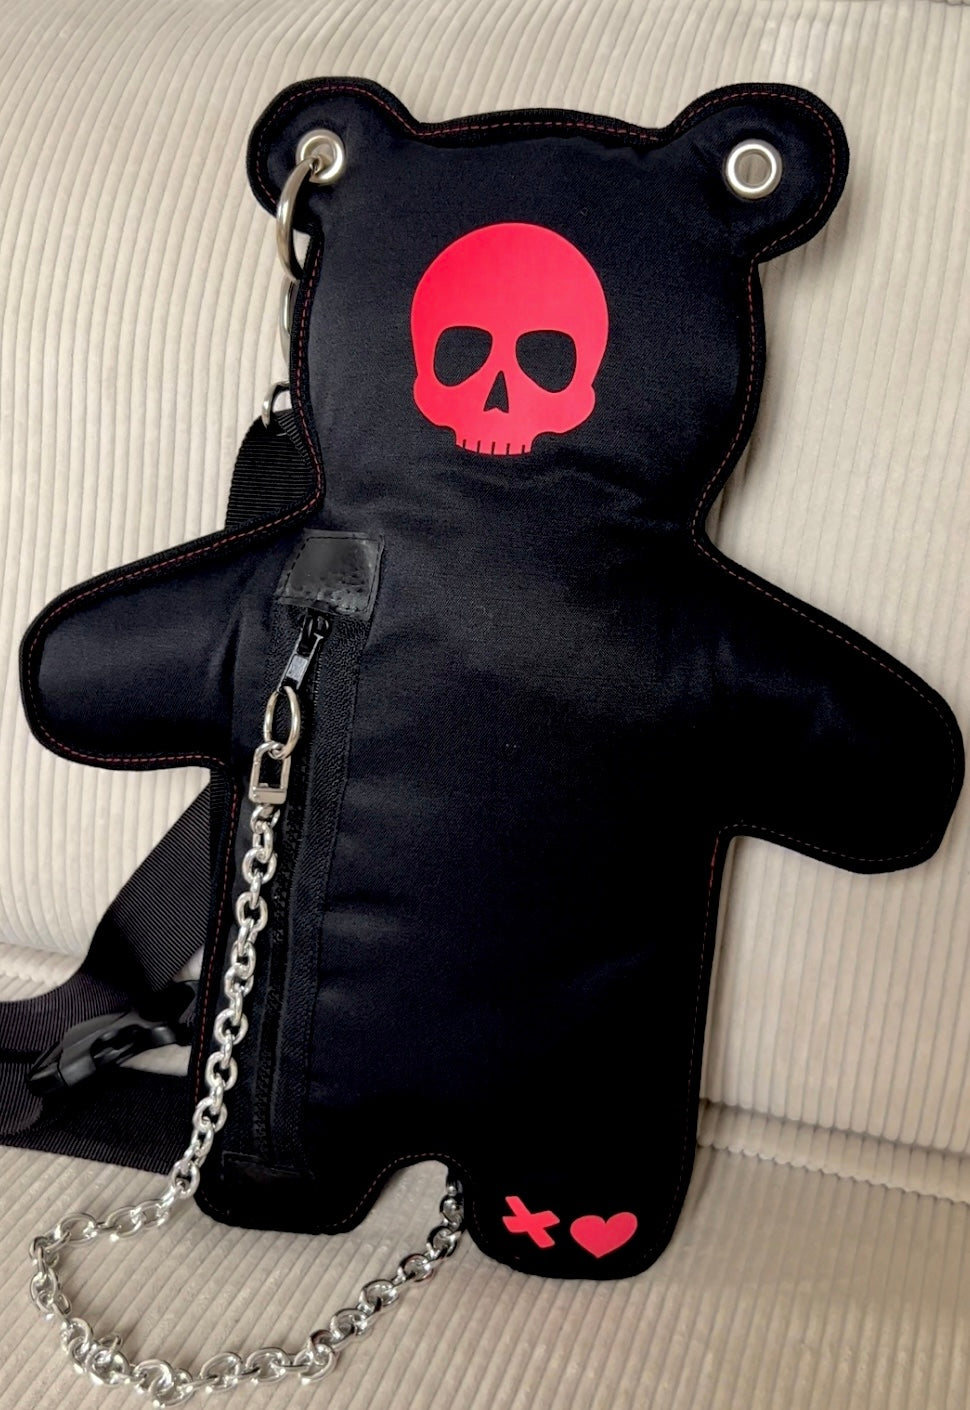 SkullBEARS 2.0 | Black | Fluorescent Reflective Red Bear Bag - SPICYBEARS